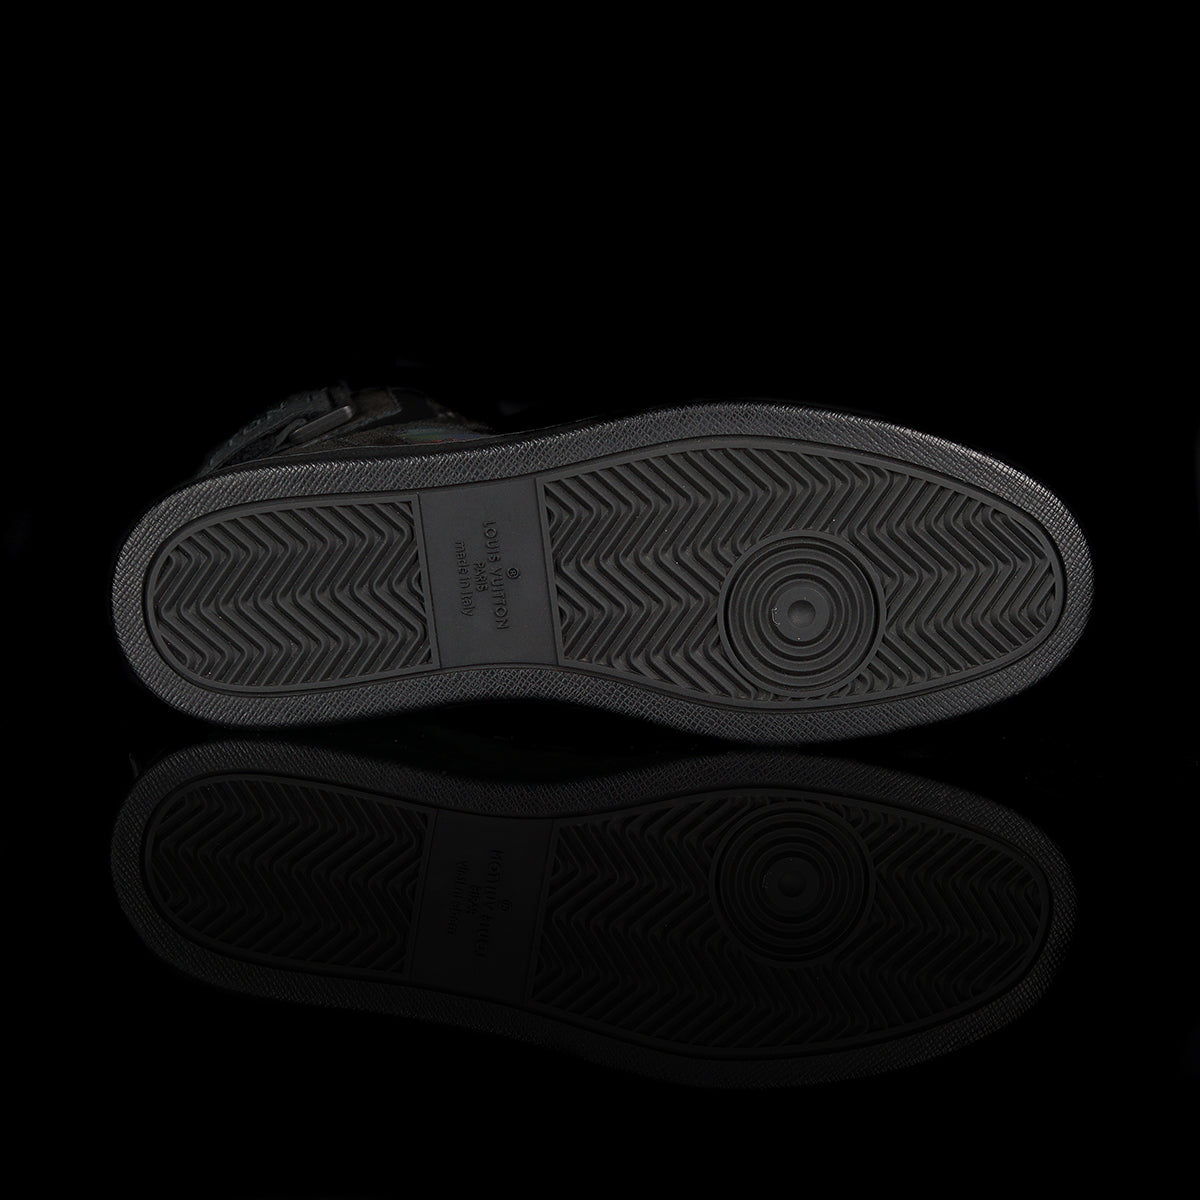 Louis Vuitton Iridescent Luxembourg Rivoli Sneaker Release